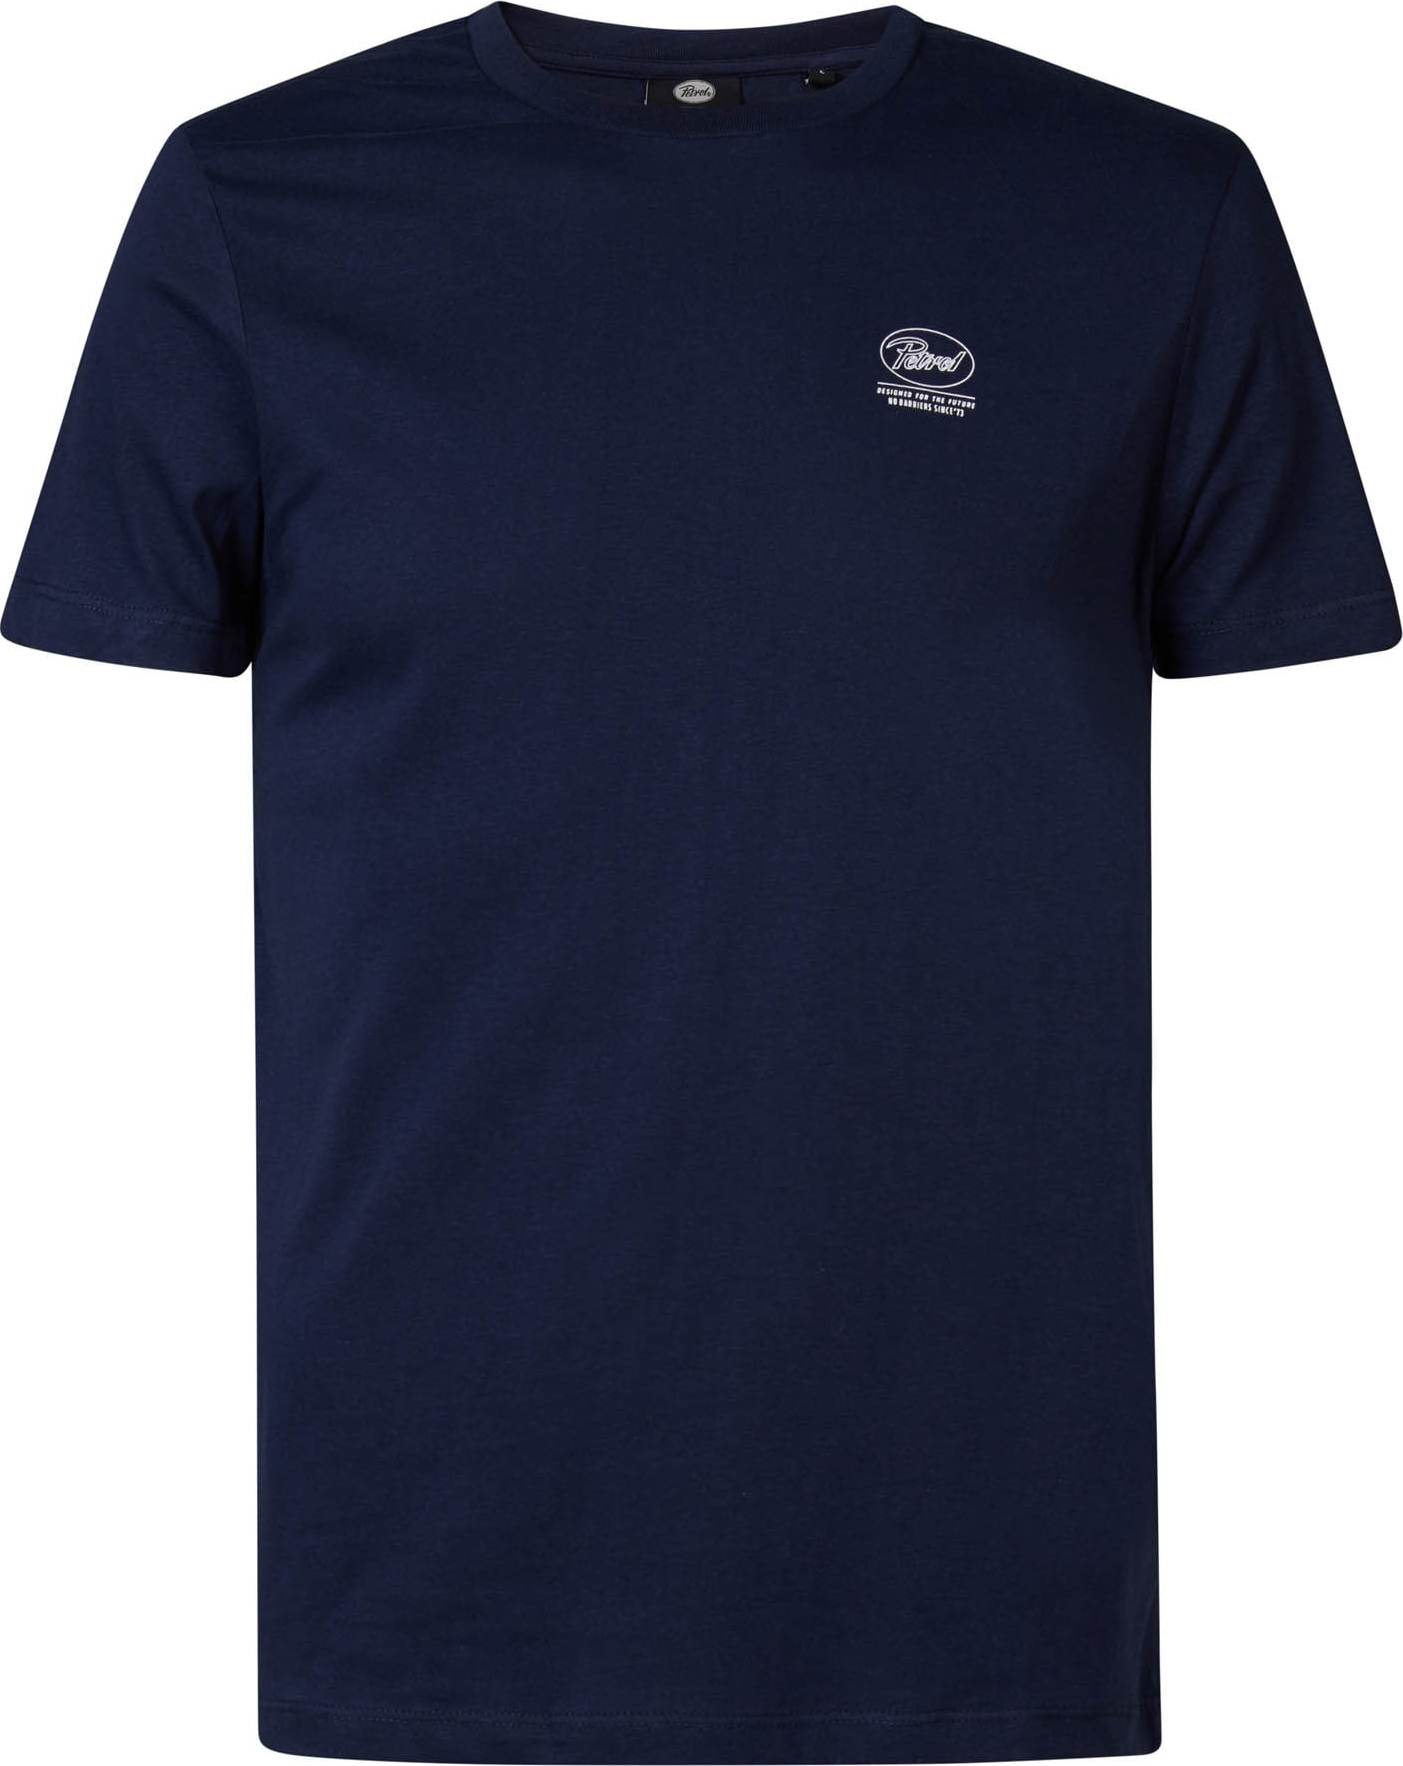 Tričko Petrol Industries námořnická modř / bílá